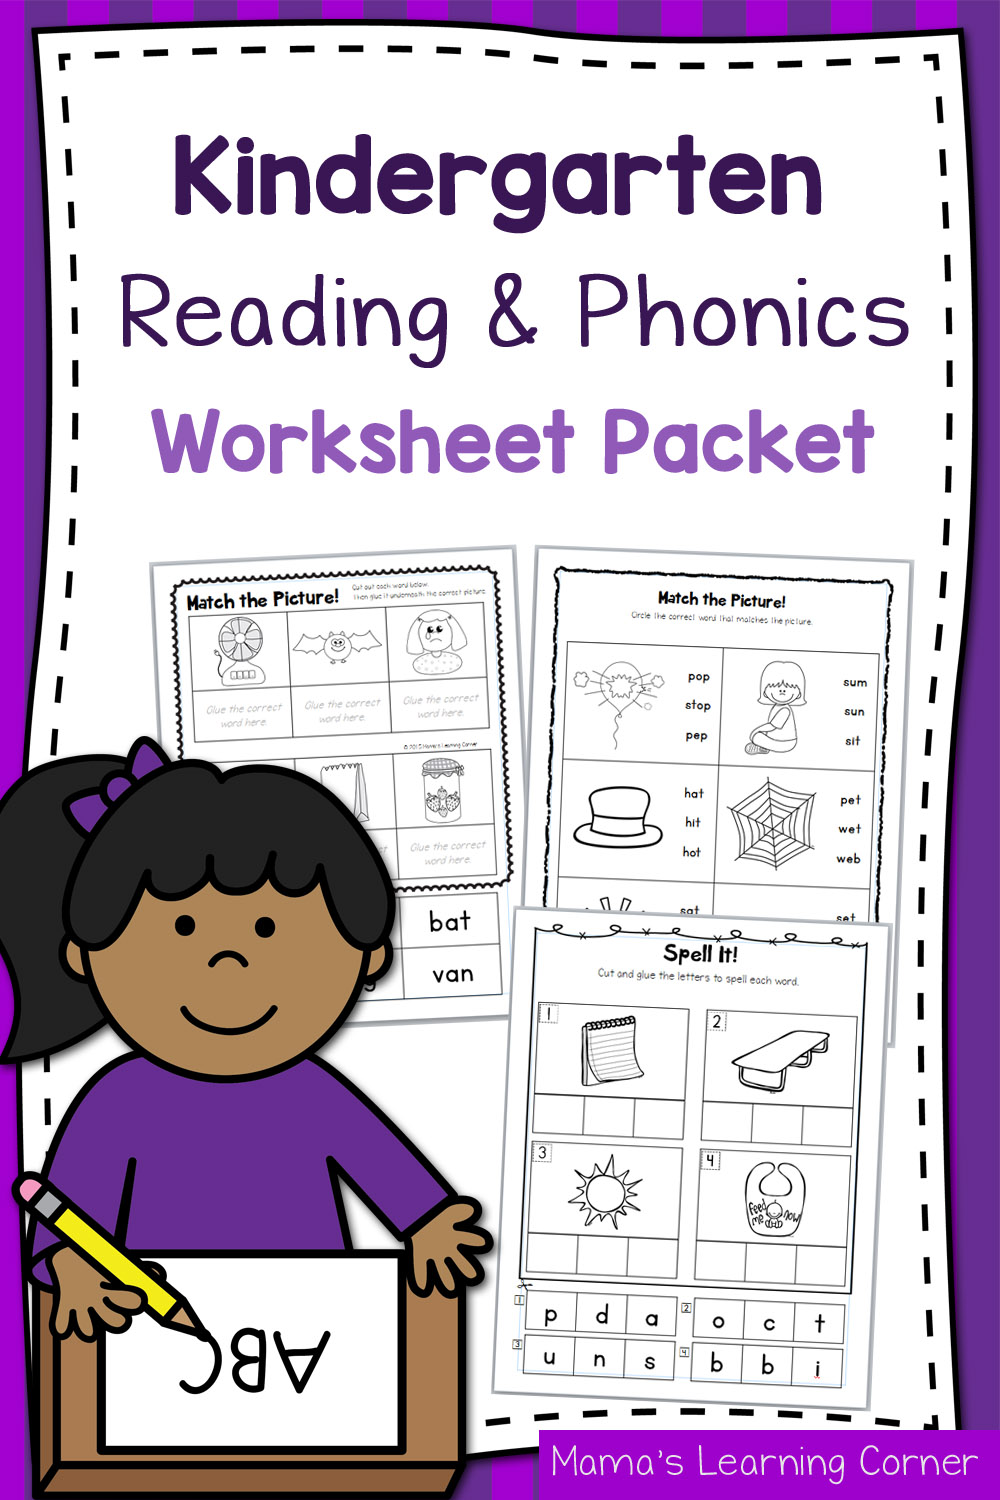 Kindergarten Reading and Phonics Worksheet Packet - Mamas Learning Corner